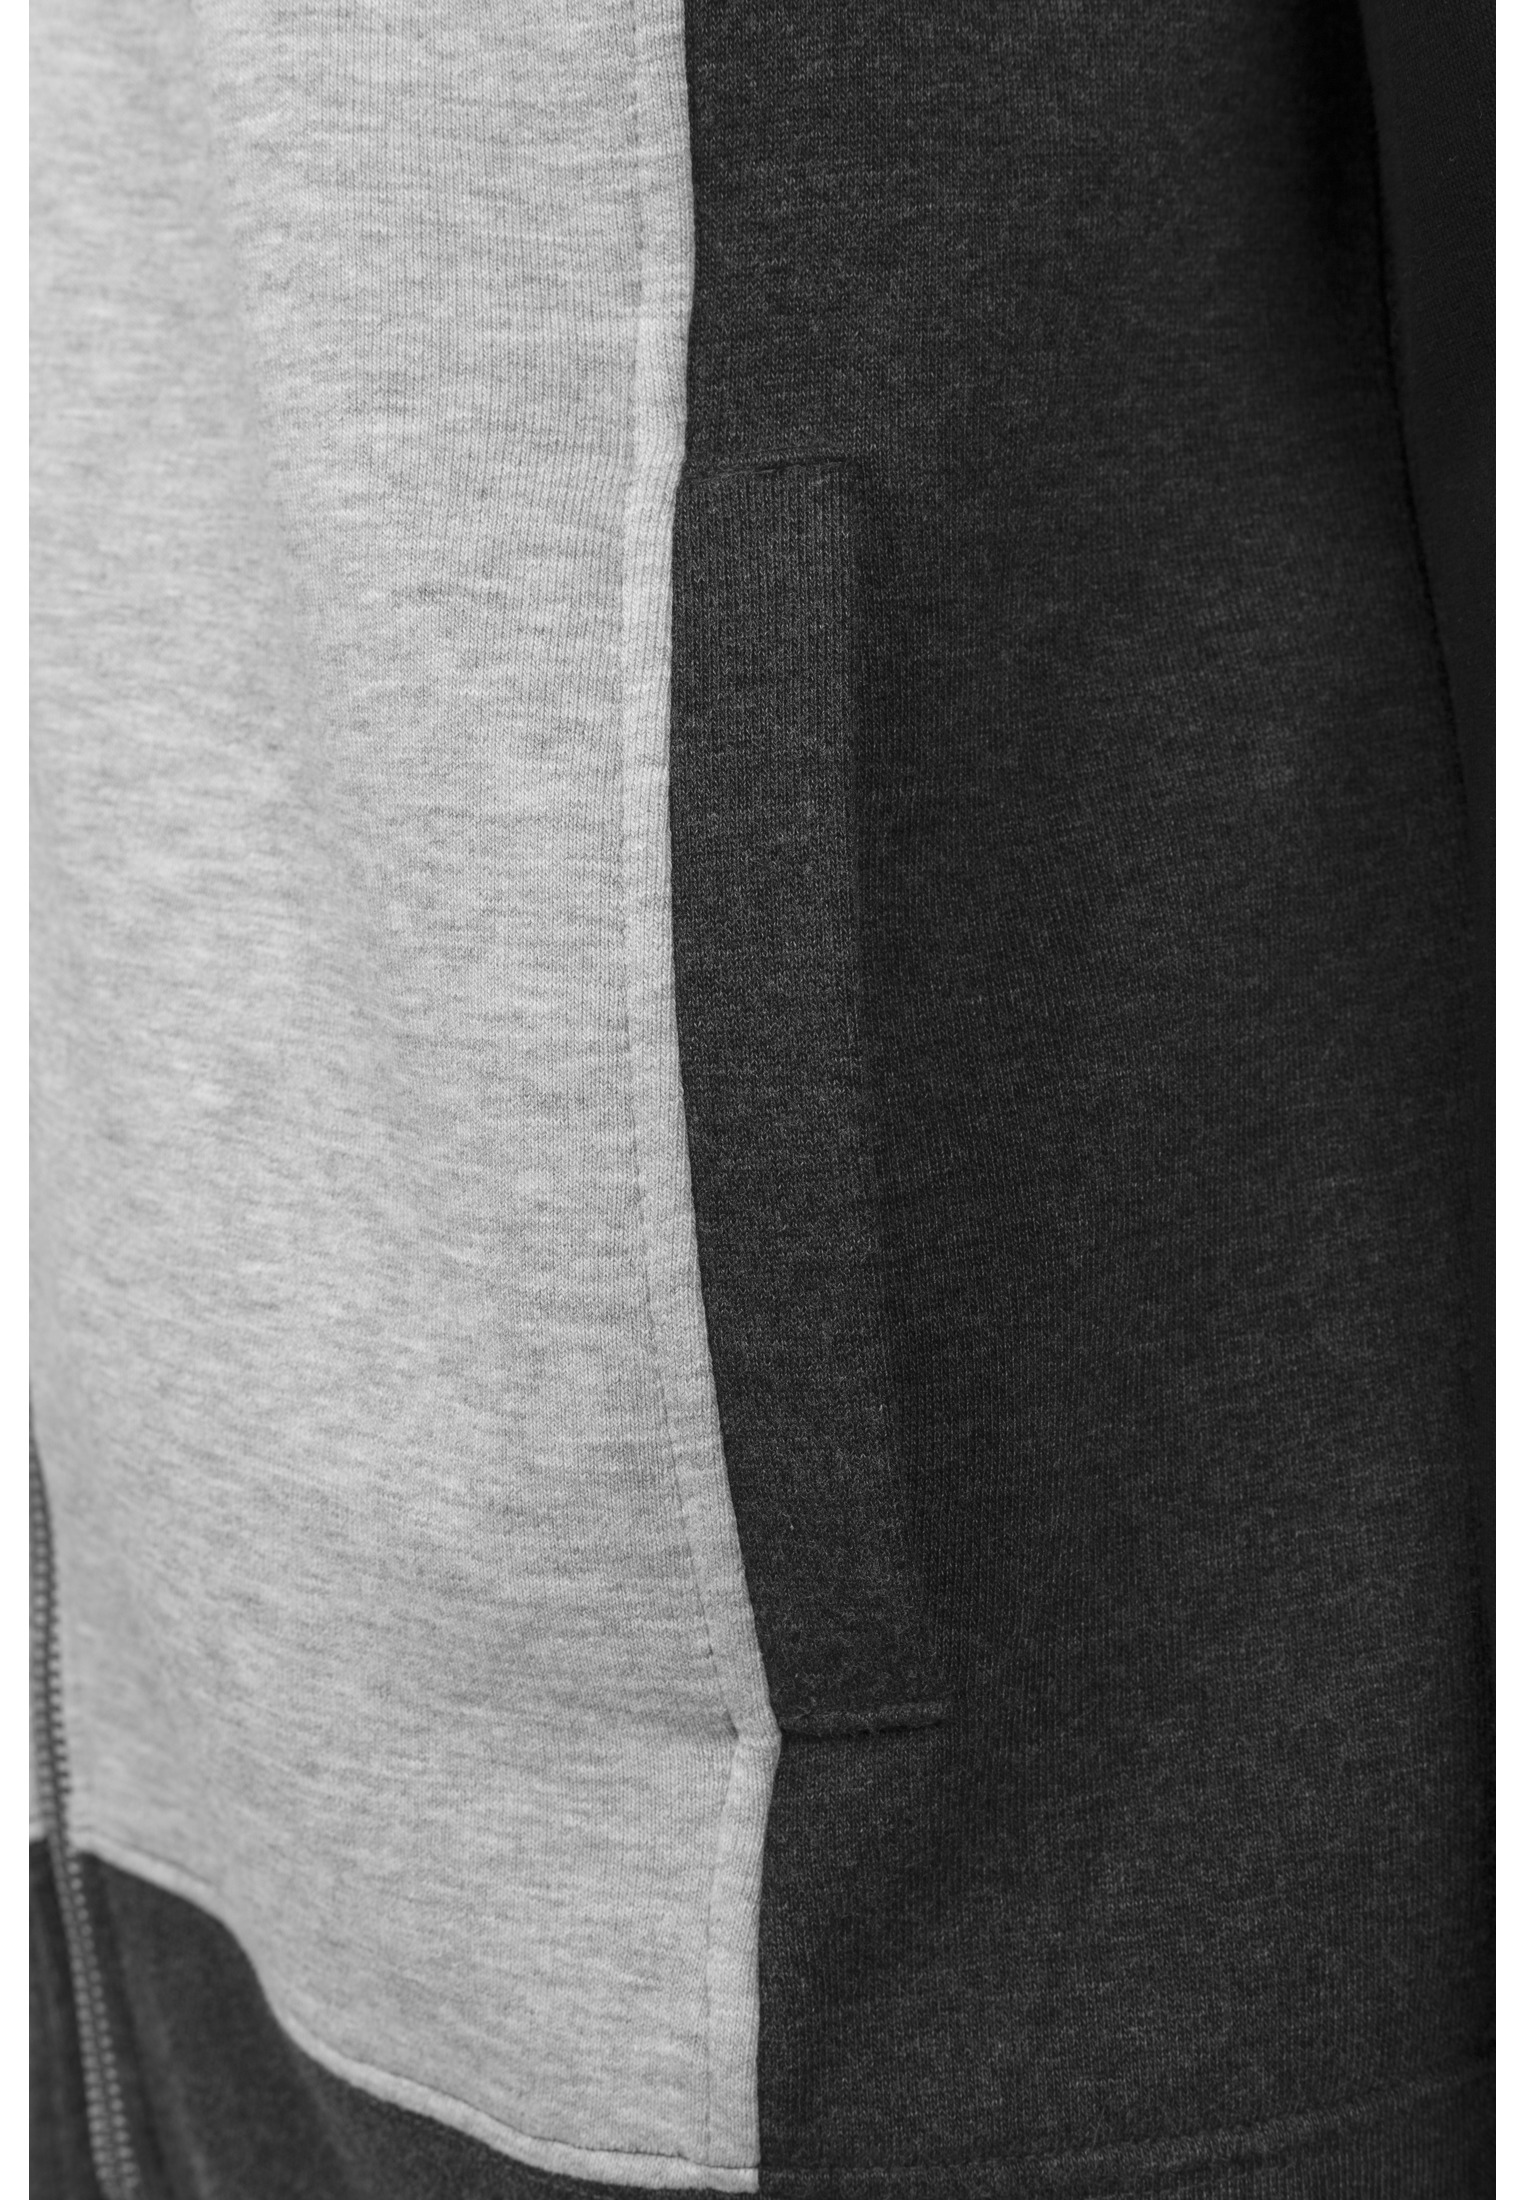 Zip Hoodies 3- Tone Sweat Zip Hoody in Farbe grey/charcoal/black